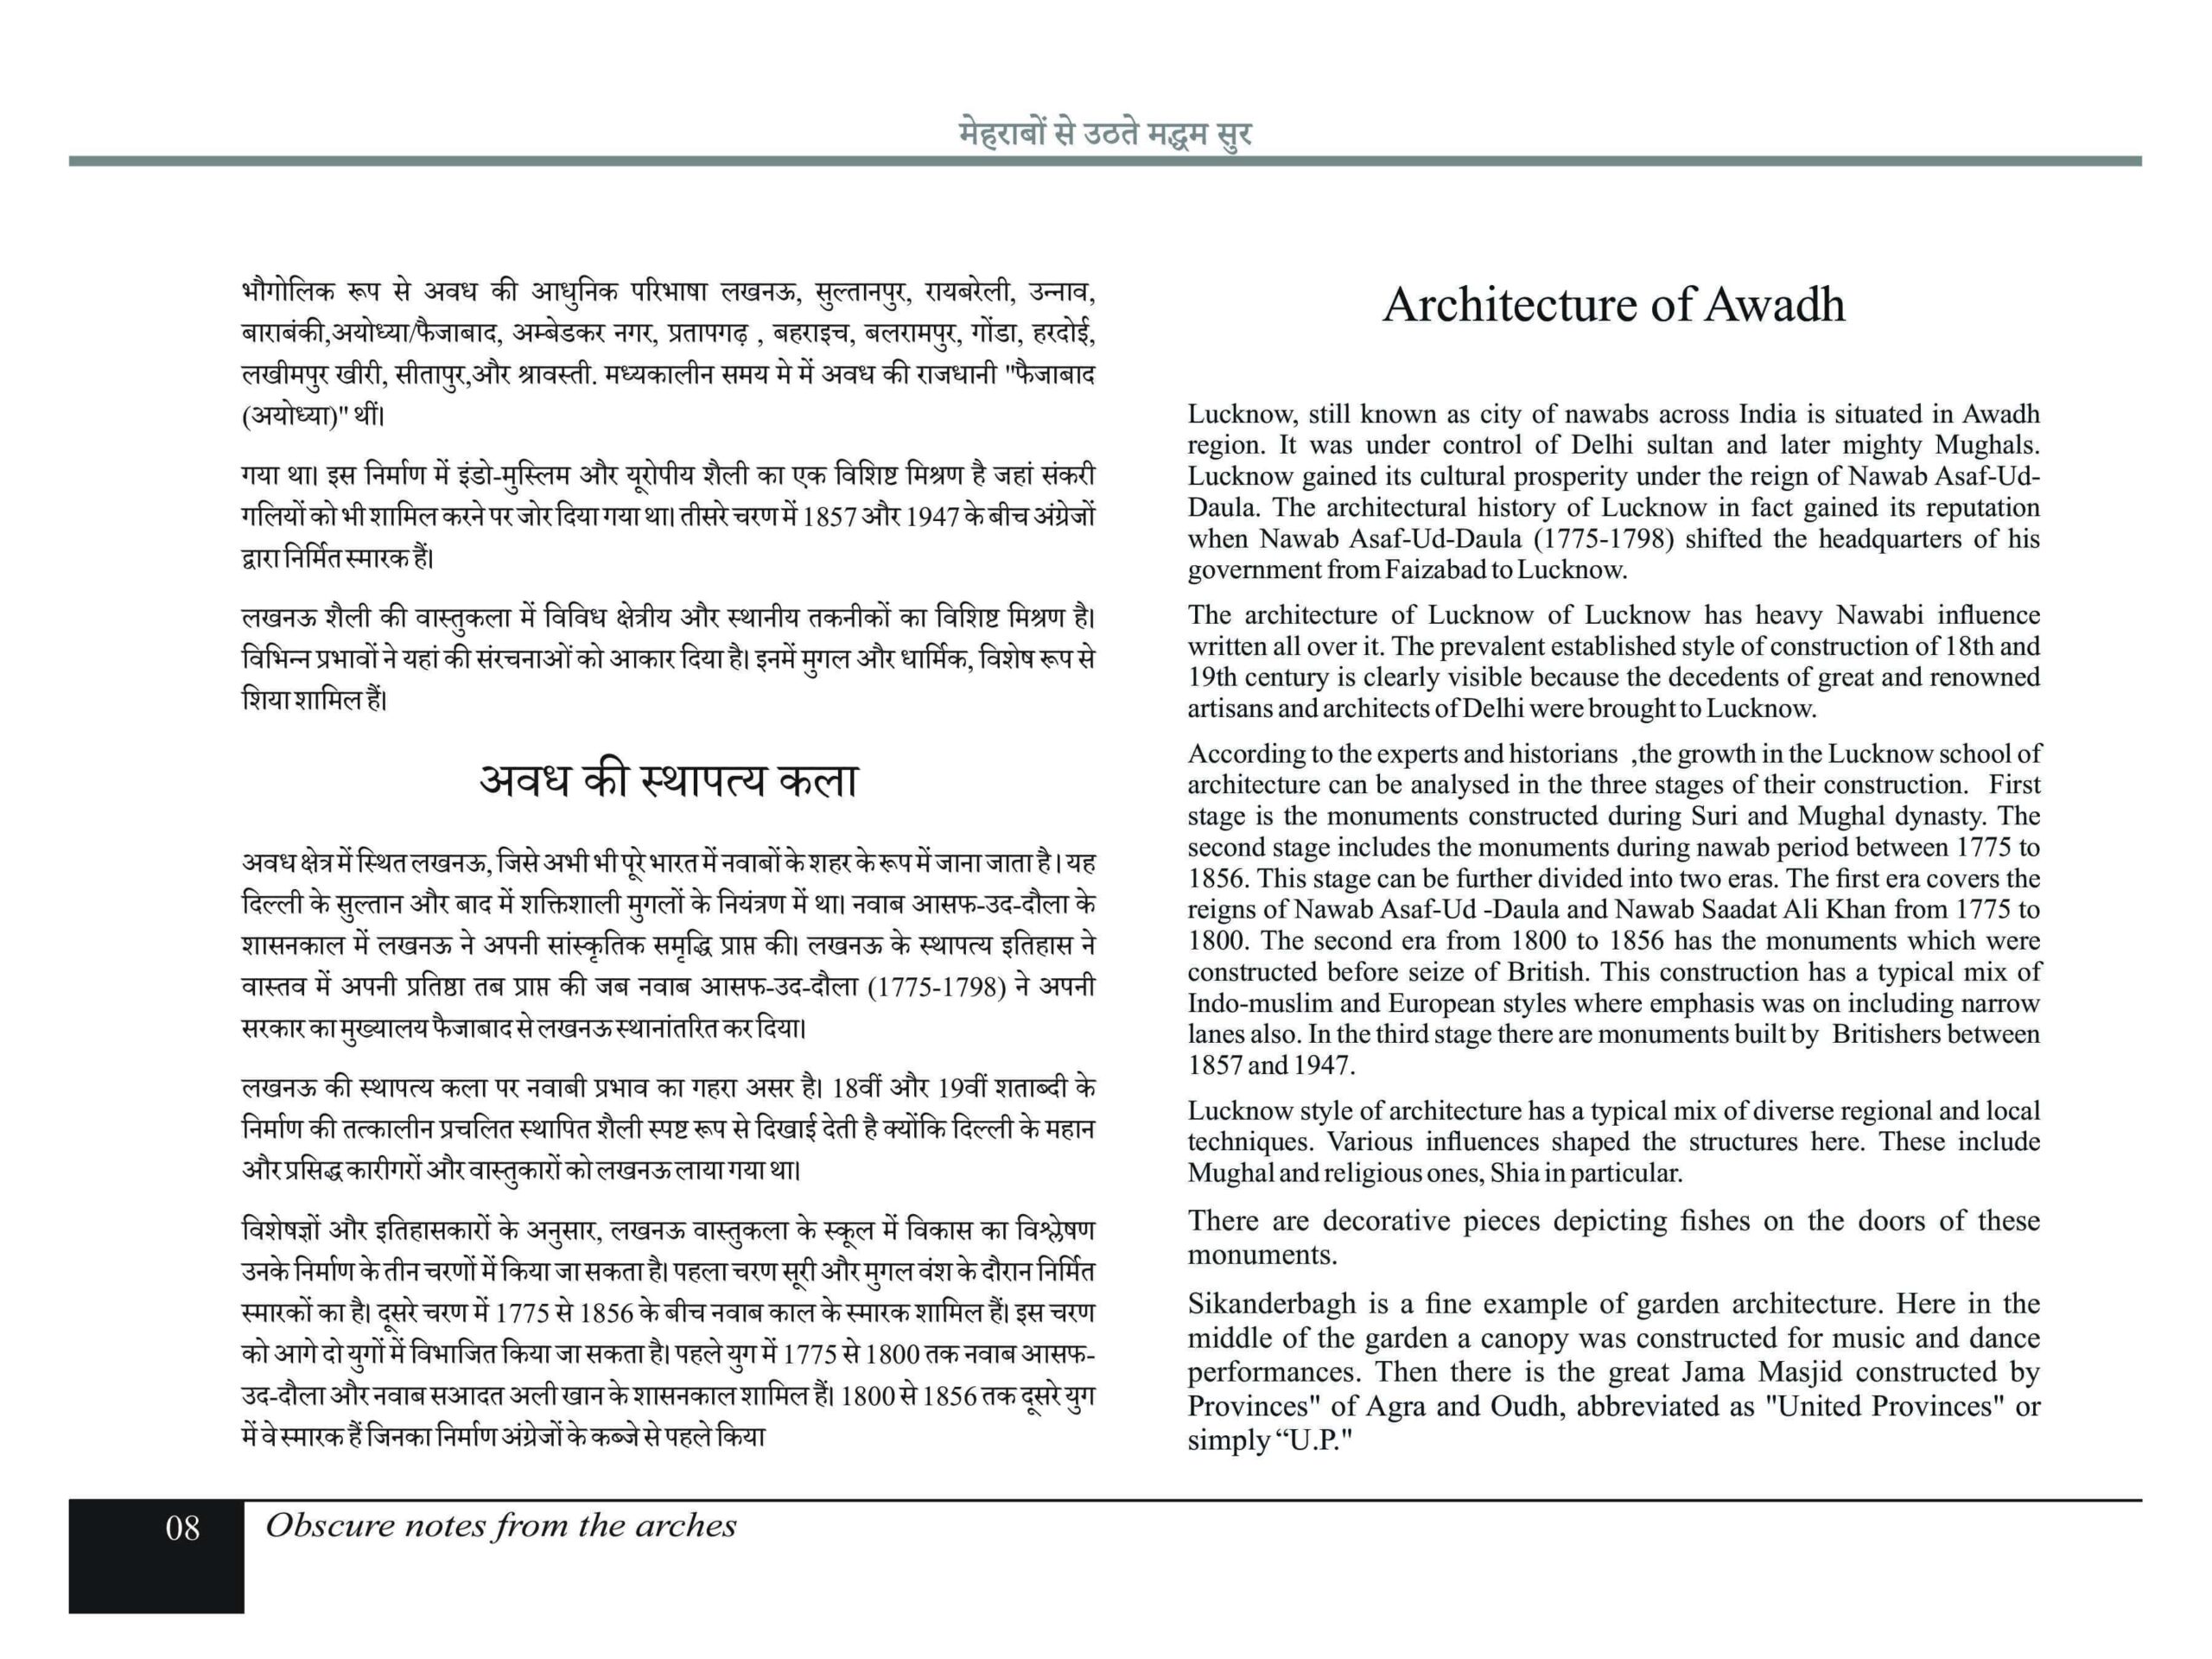 Awadh Pictorial Book by Pawan Bakhshi